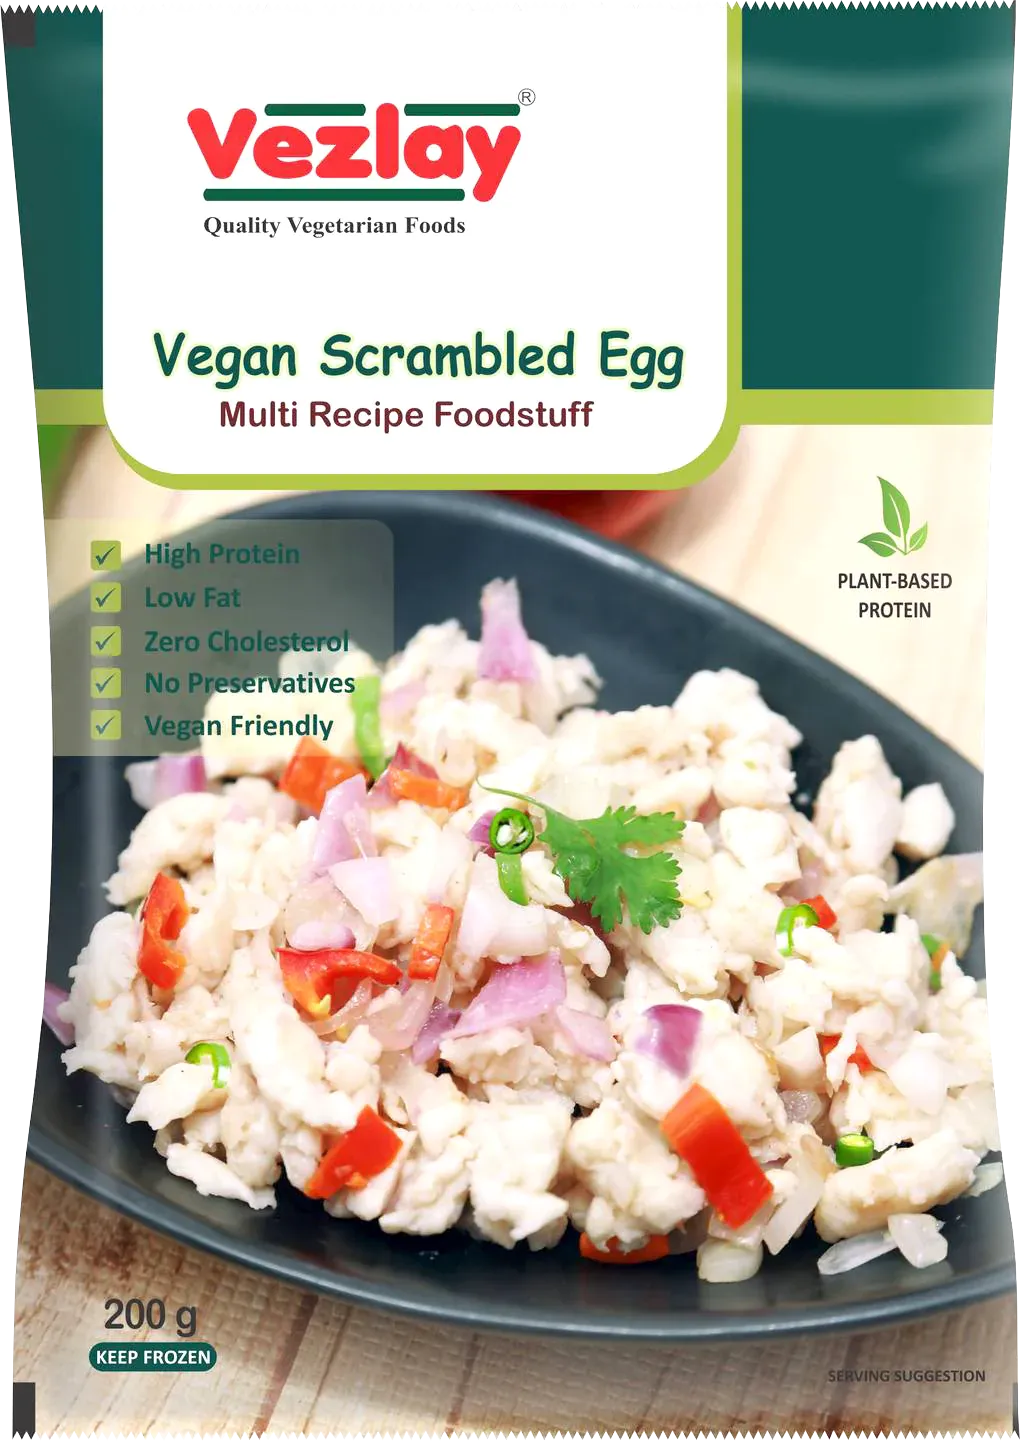 Vezlay Vegan Scrambled Egg Image